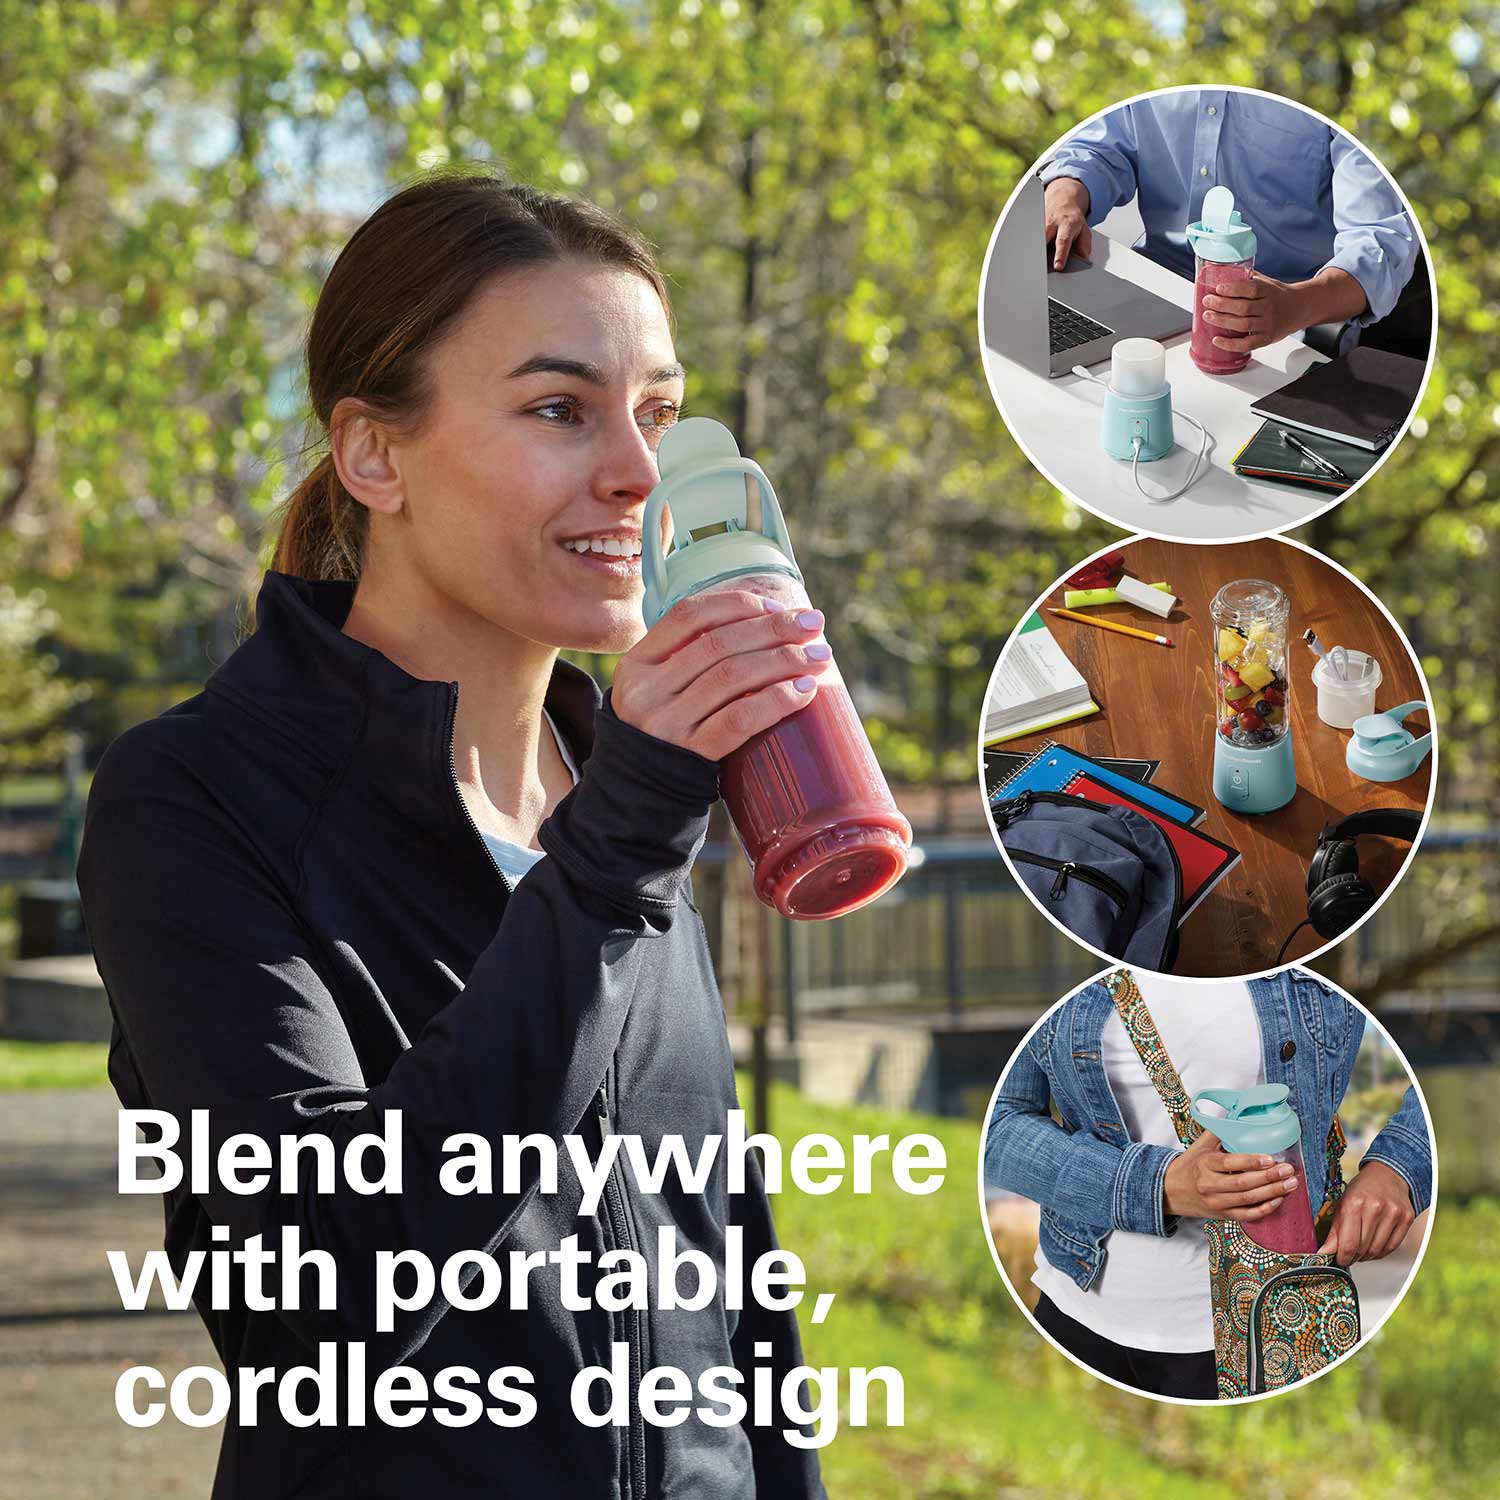 Hamilton Beach Blend Now™ Portable Cordless Blender, Aqua - 51182